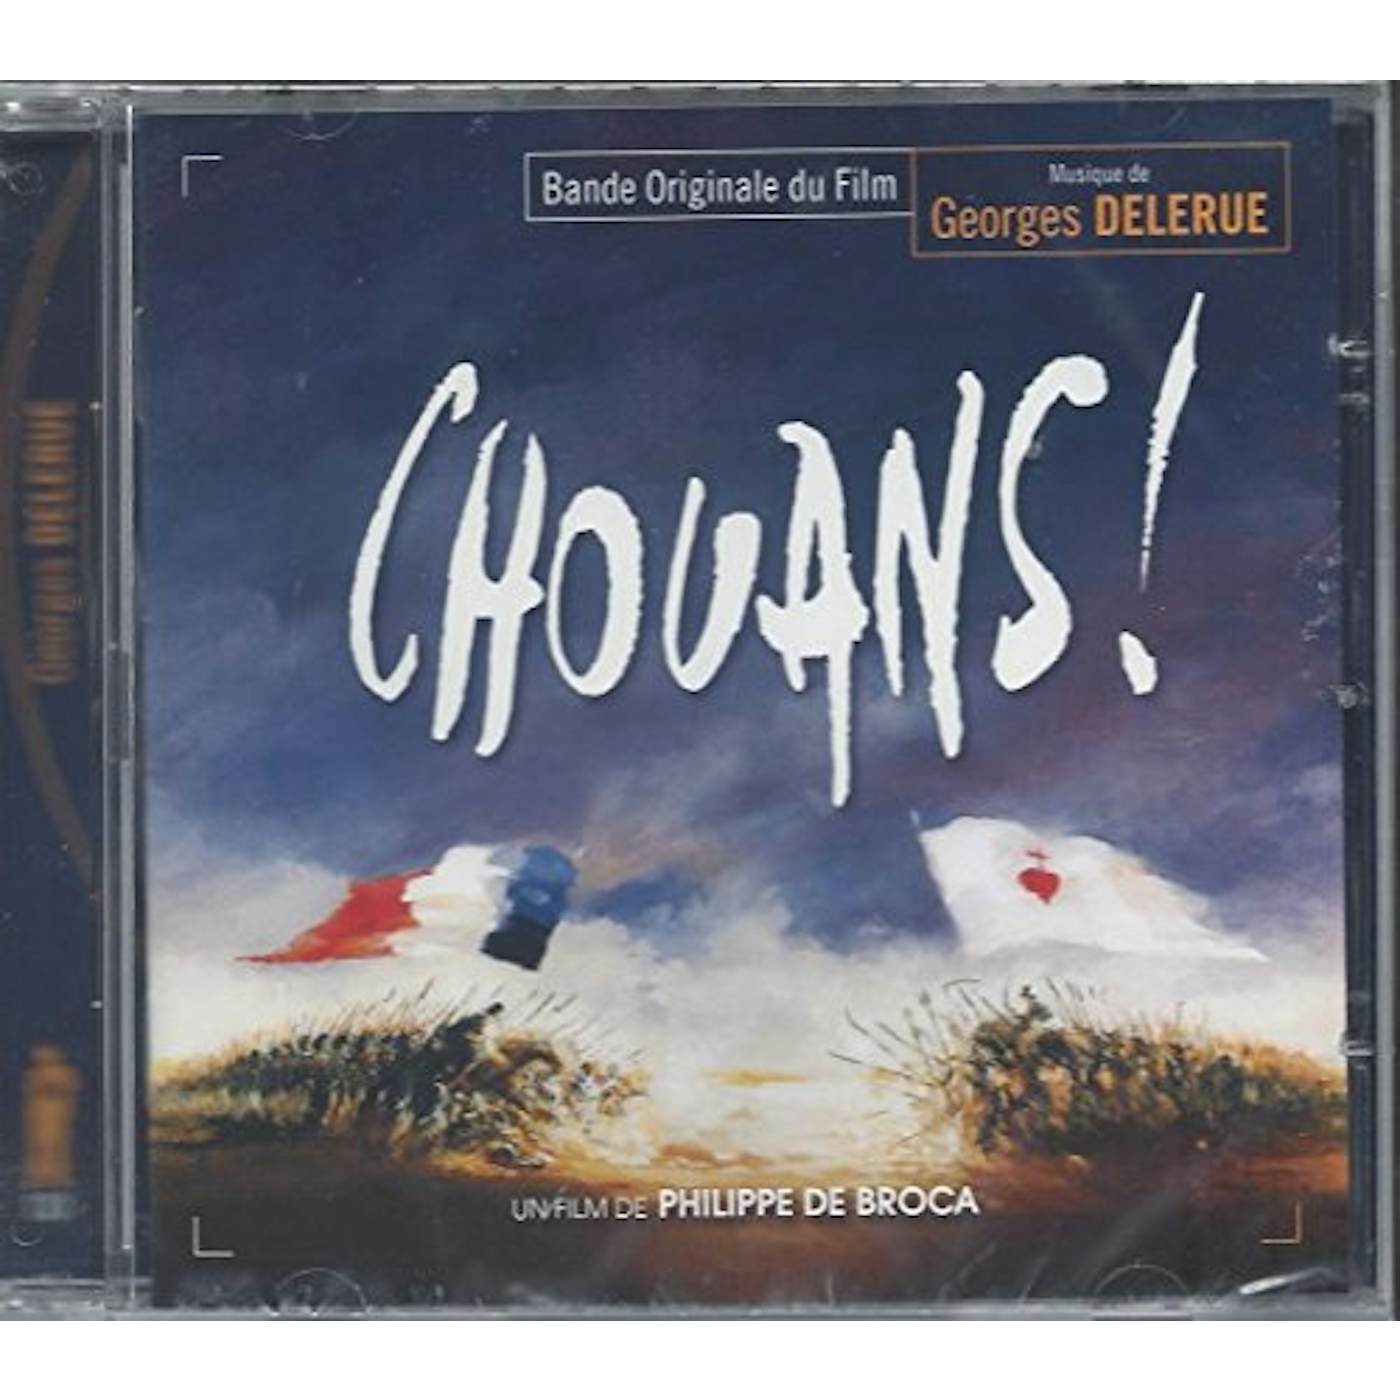 Georges Delerue CHOUANS / Original Soundtrack CD